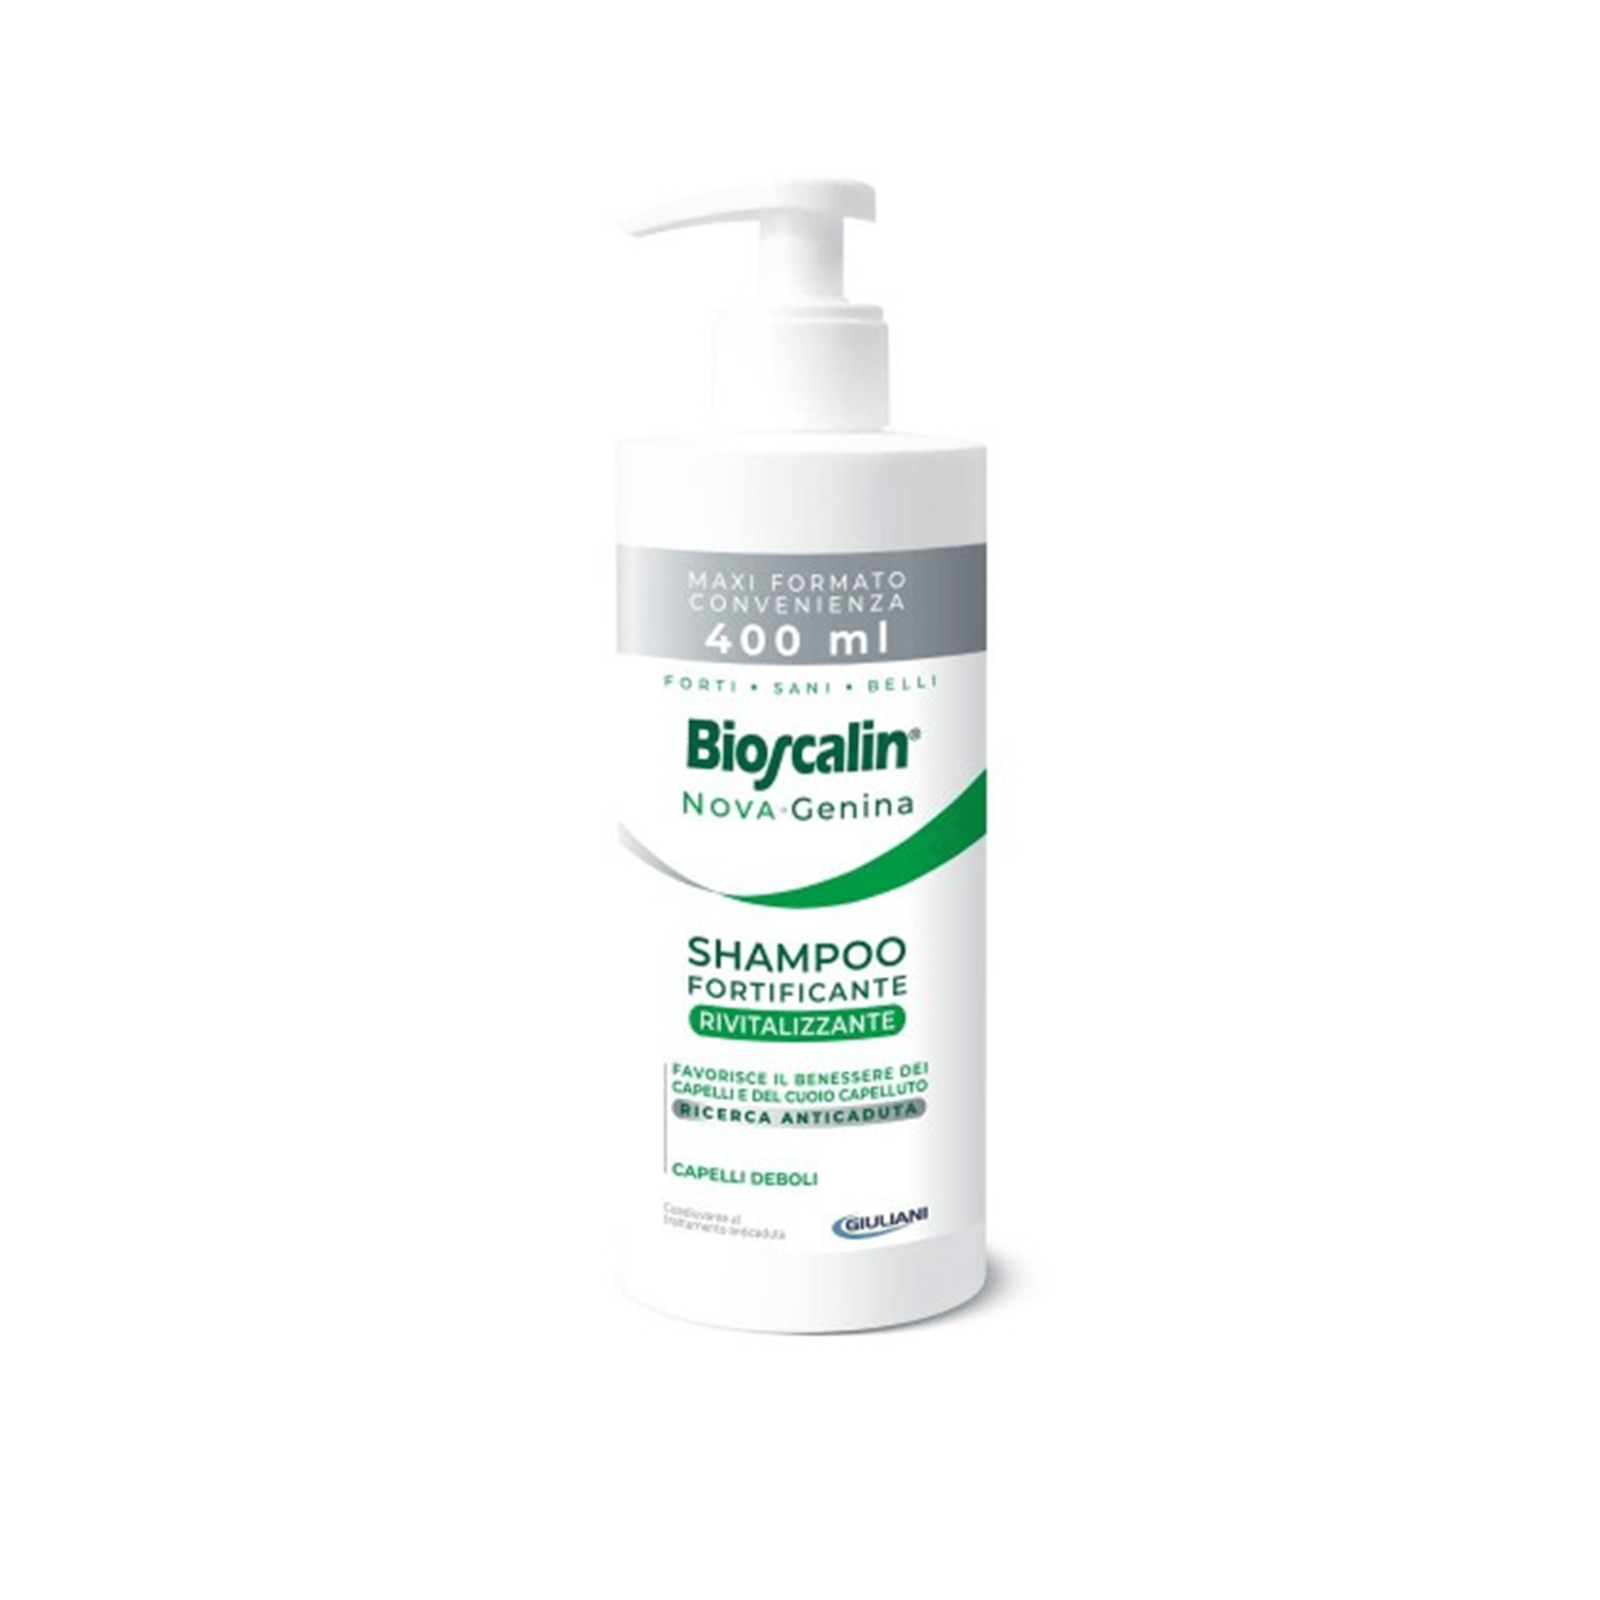 Bioscalin Nova Genina Revitalizing Fortifying Shampoo 400ml (13.52floz)